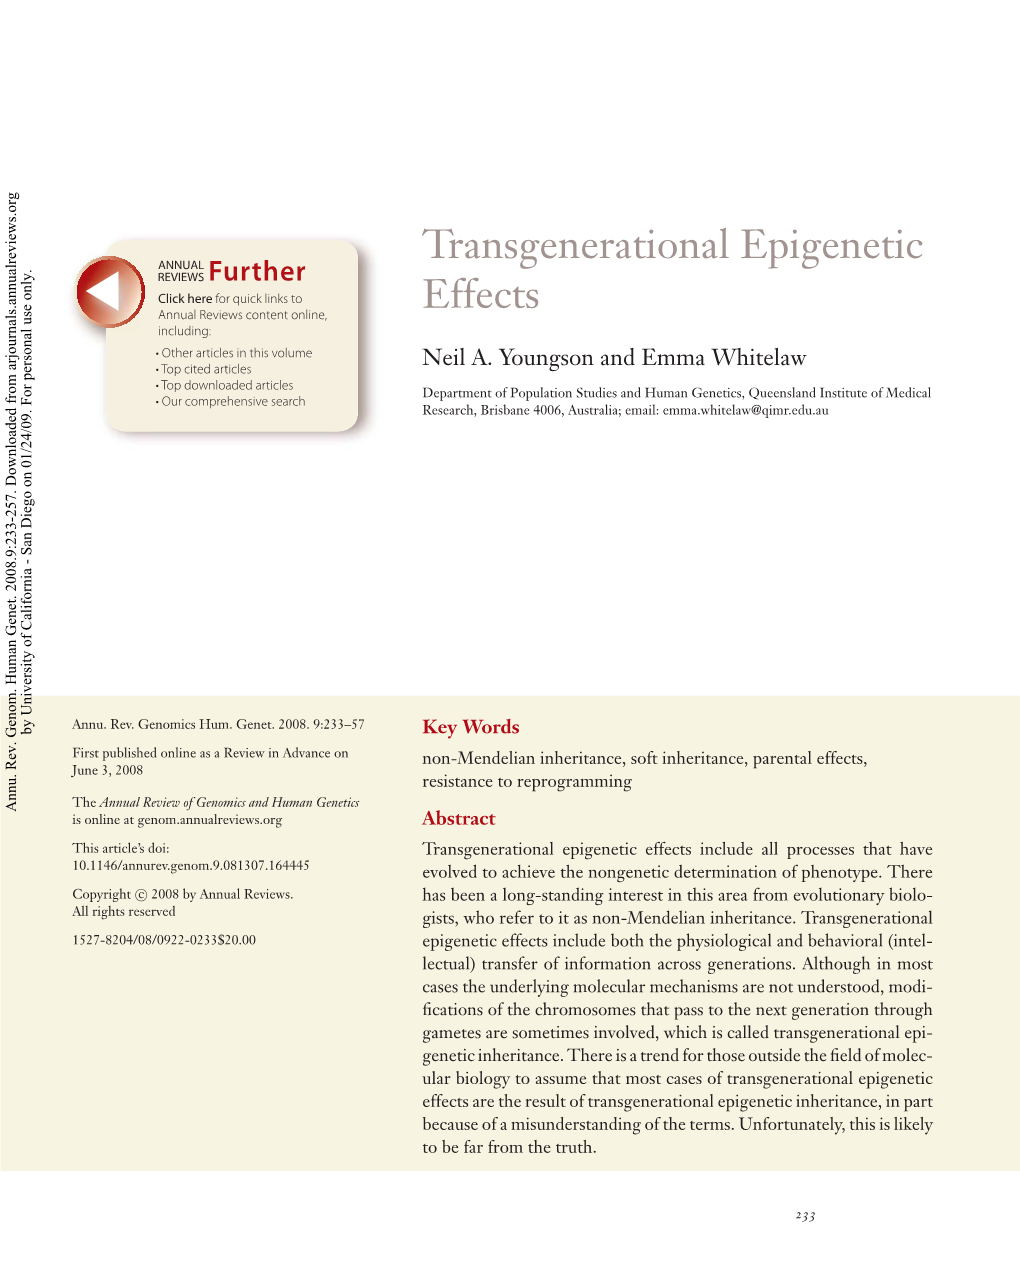 Transgenerational Epigenetic Effects